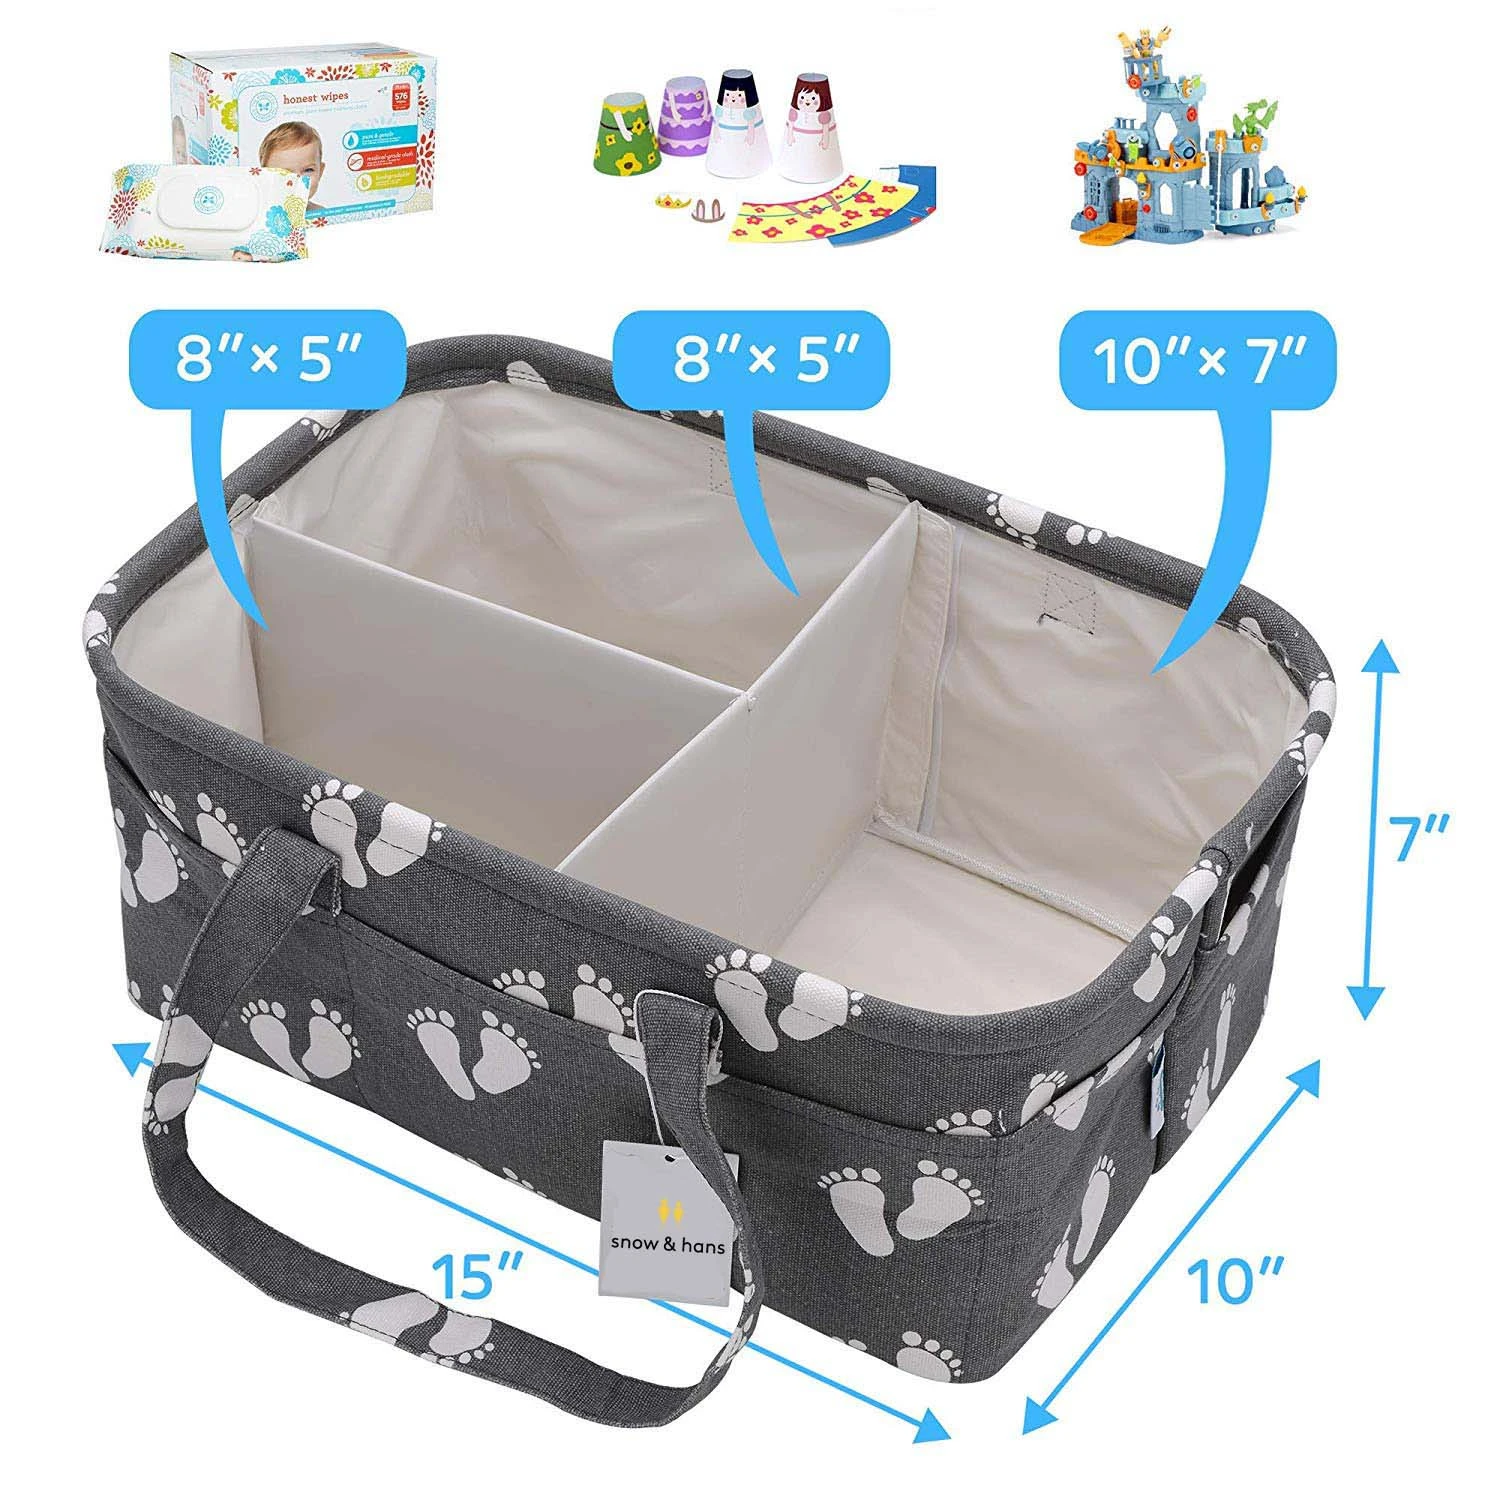 Household items high quality bathroom dirty diaper Fabric storage boxes box organizer basket bags caddy